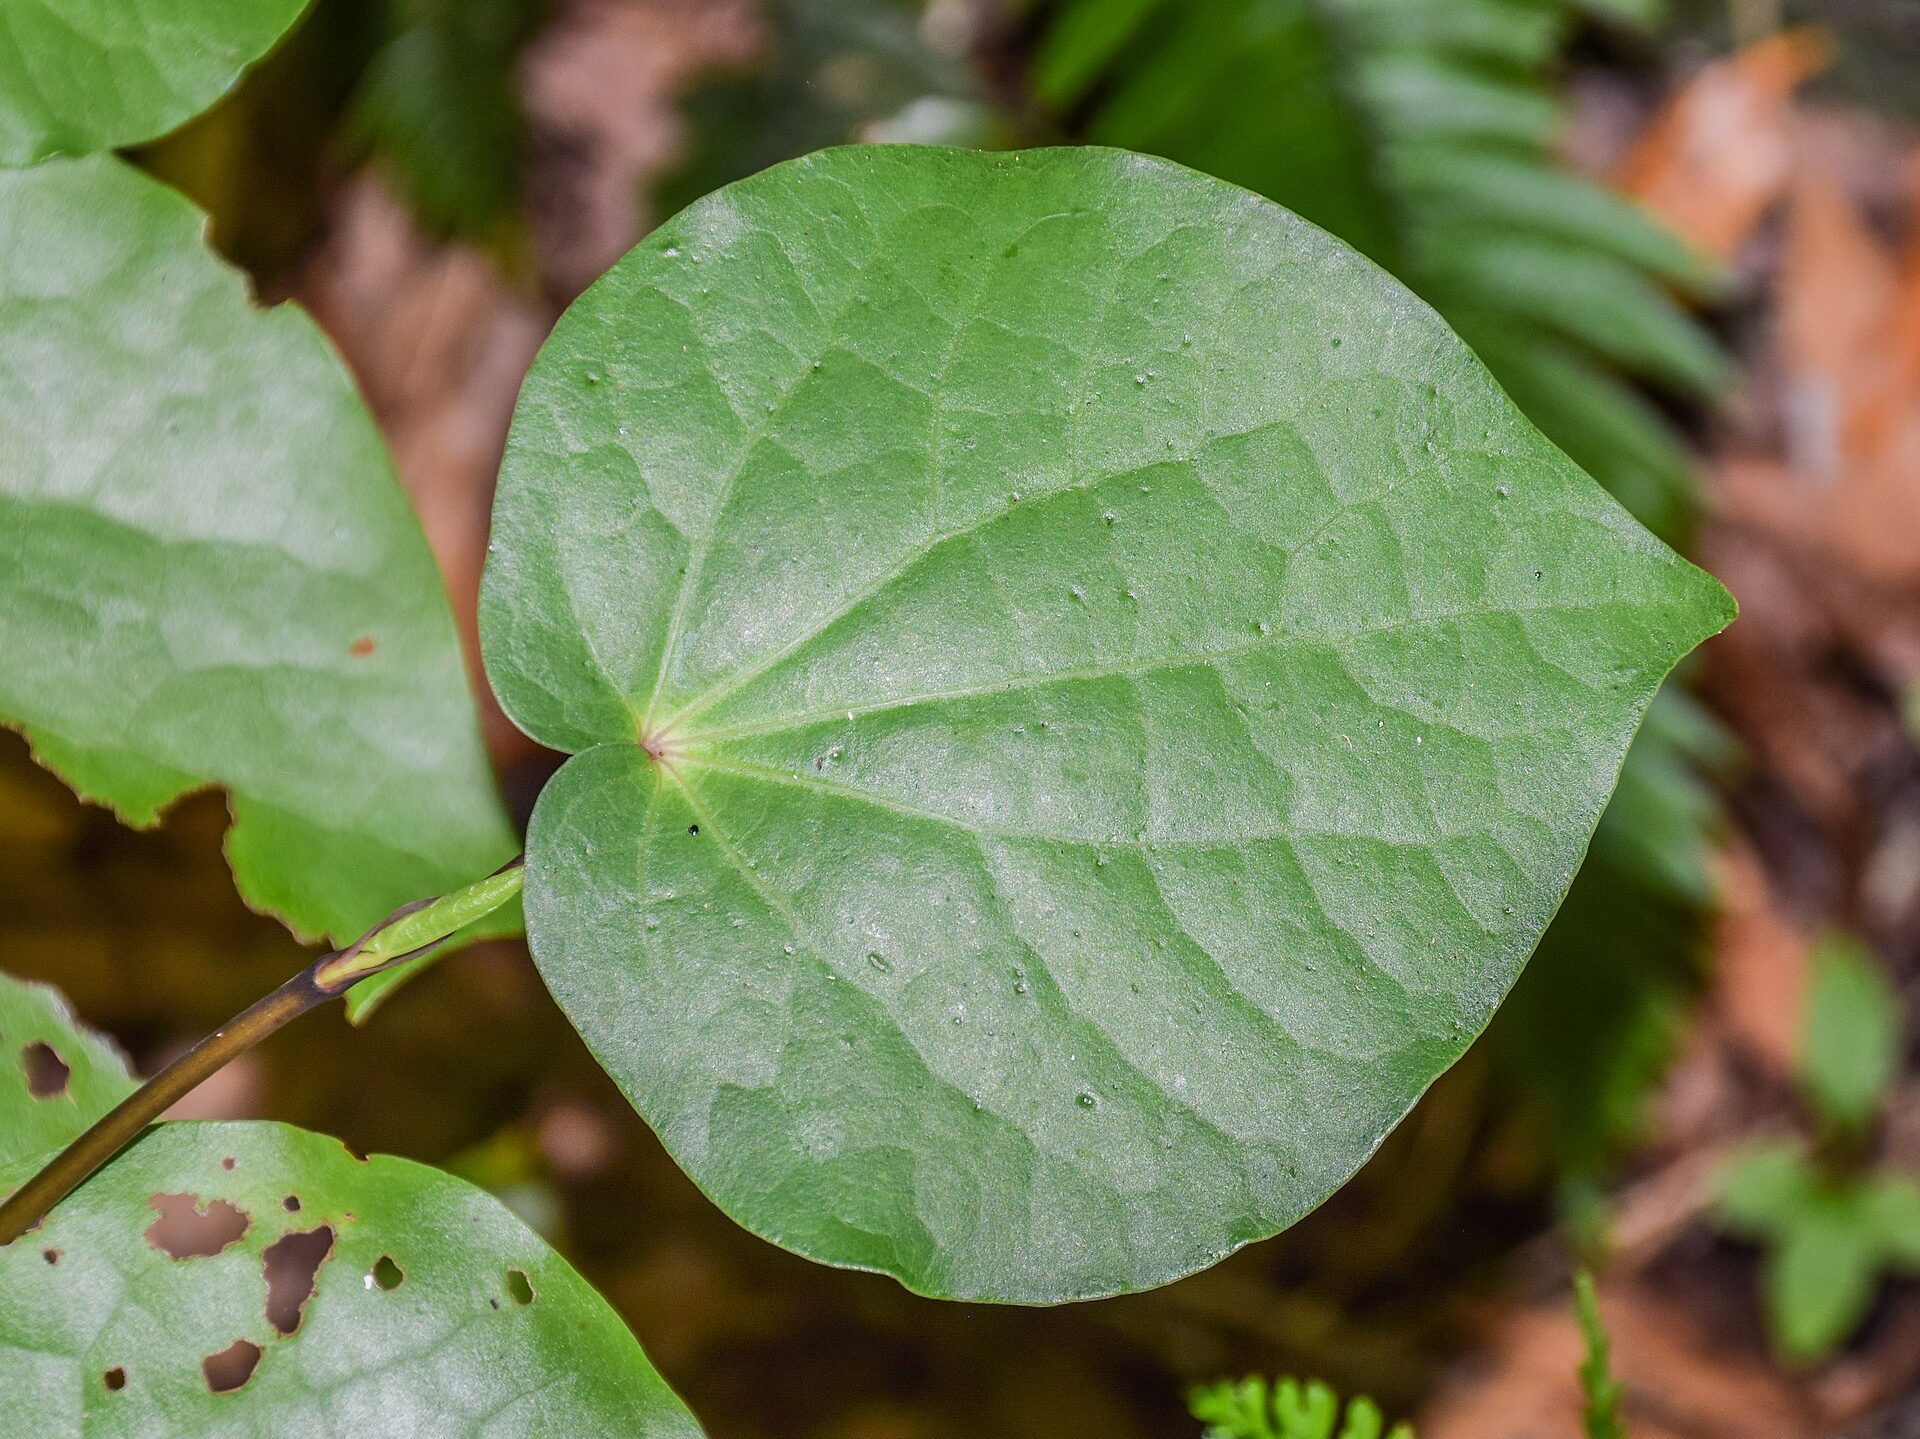 Kawakawa leaf up close